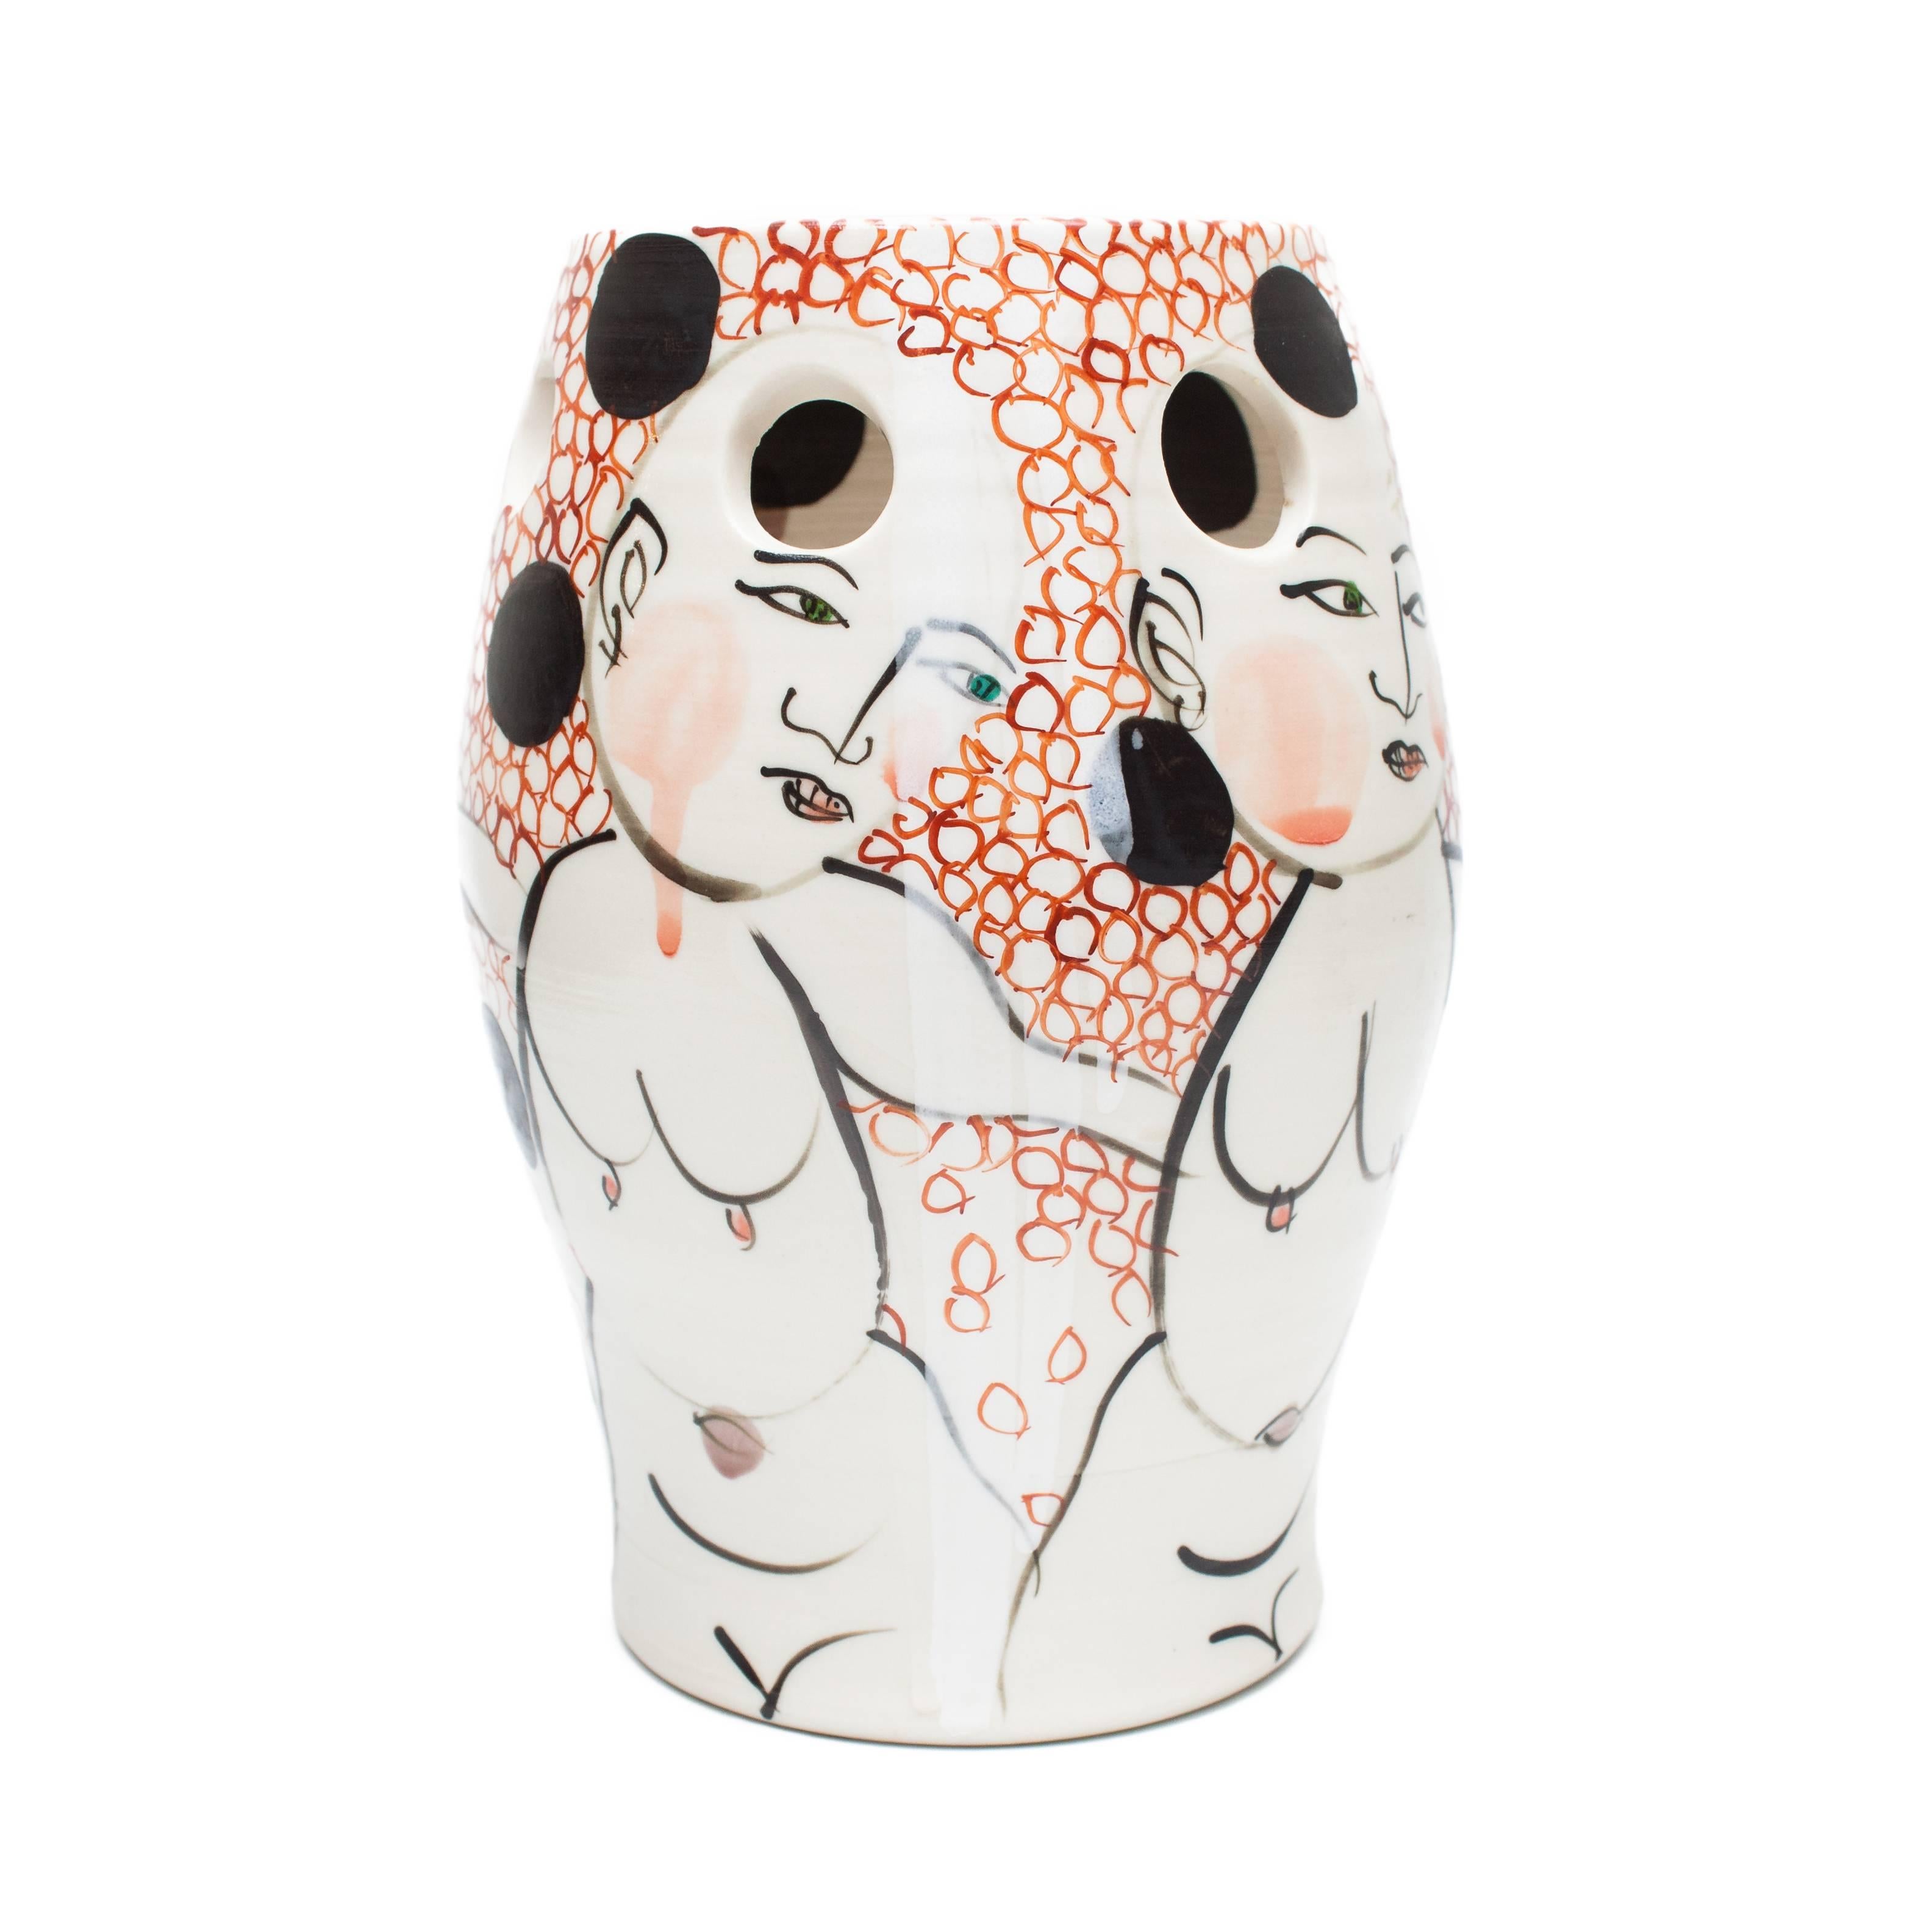 Vase with Women - Art by Akio Takamori